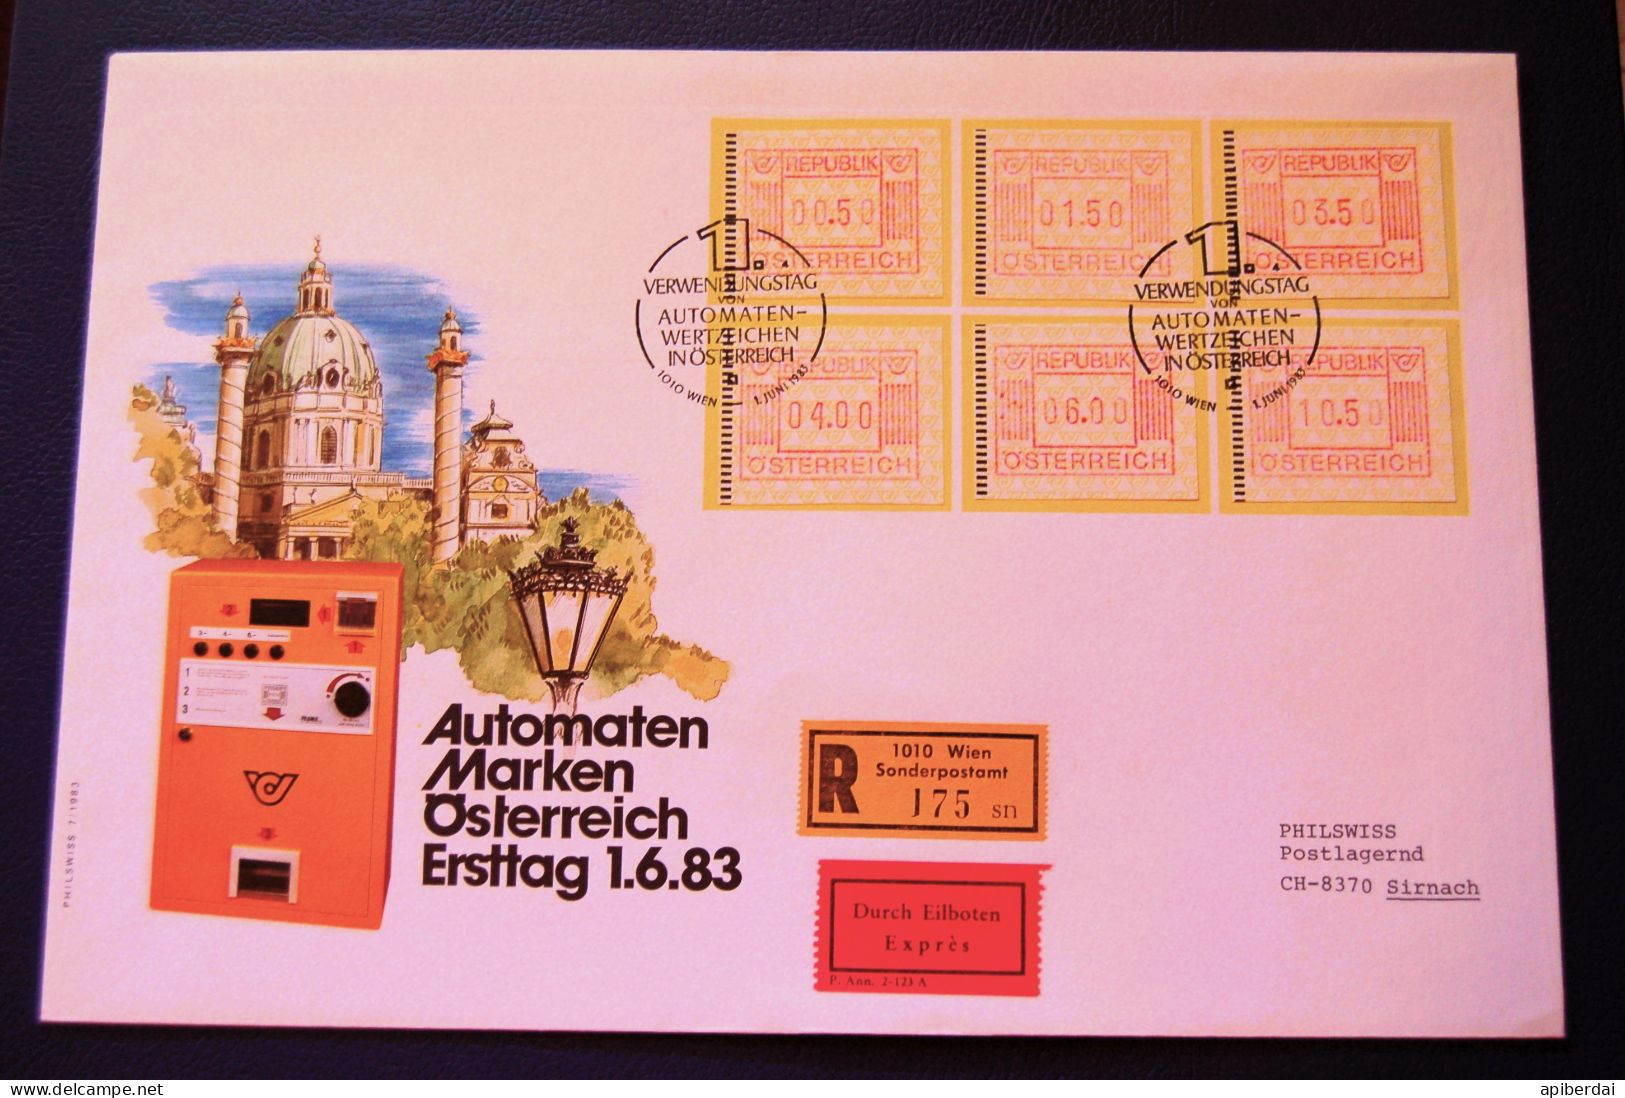 Autriche Austria -  1983 FDC With 6 ATM Stamps - Machines à Affranchir (EMA)